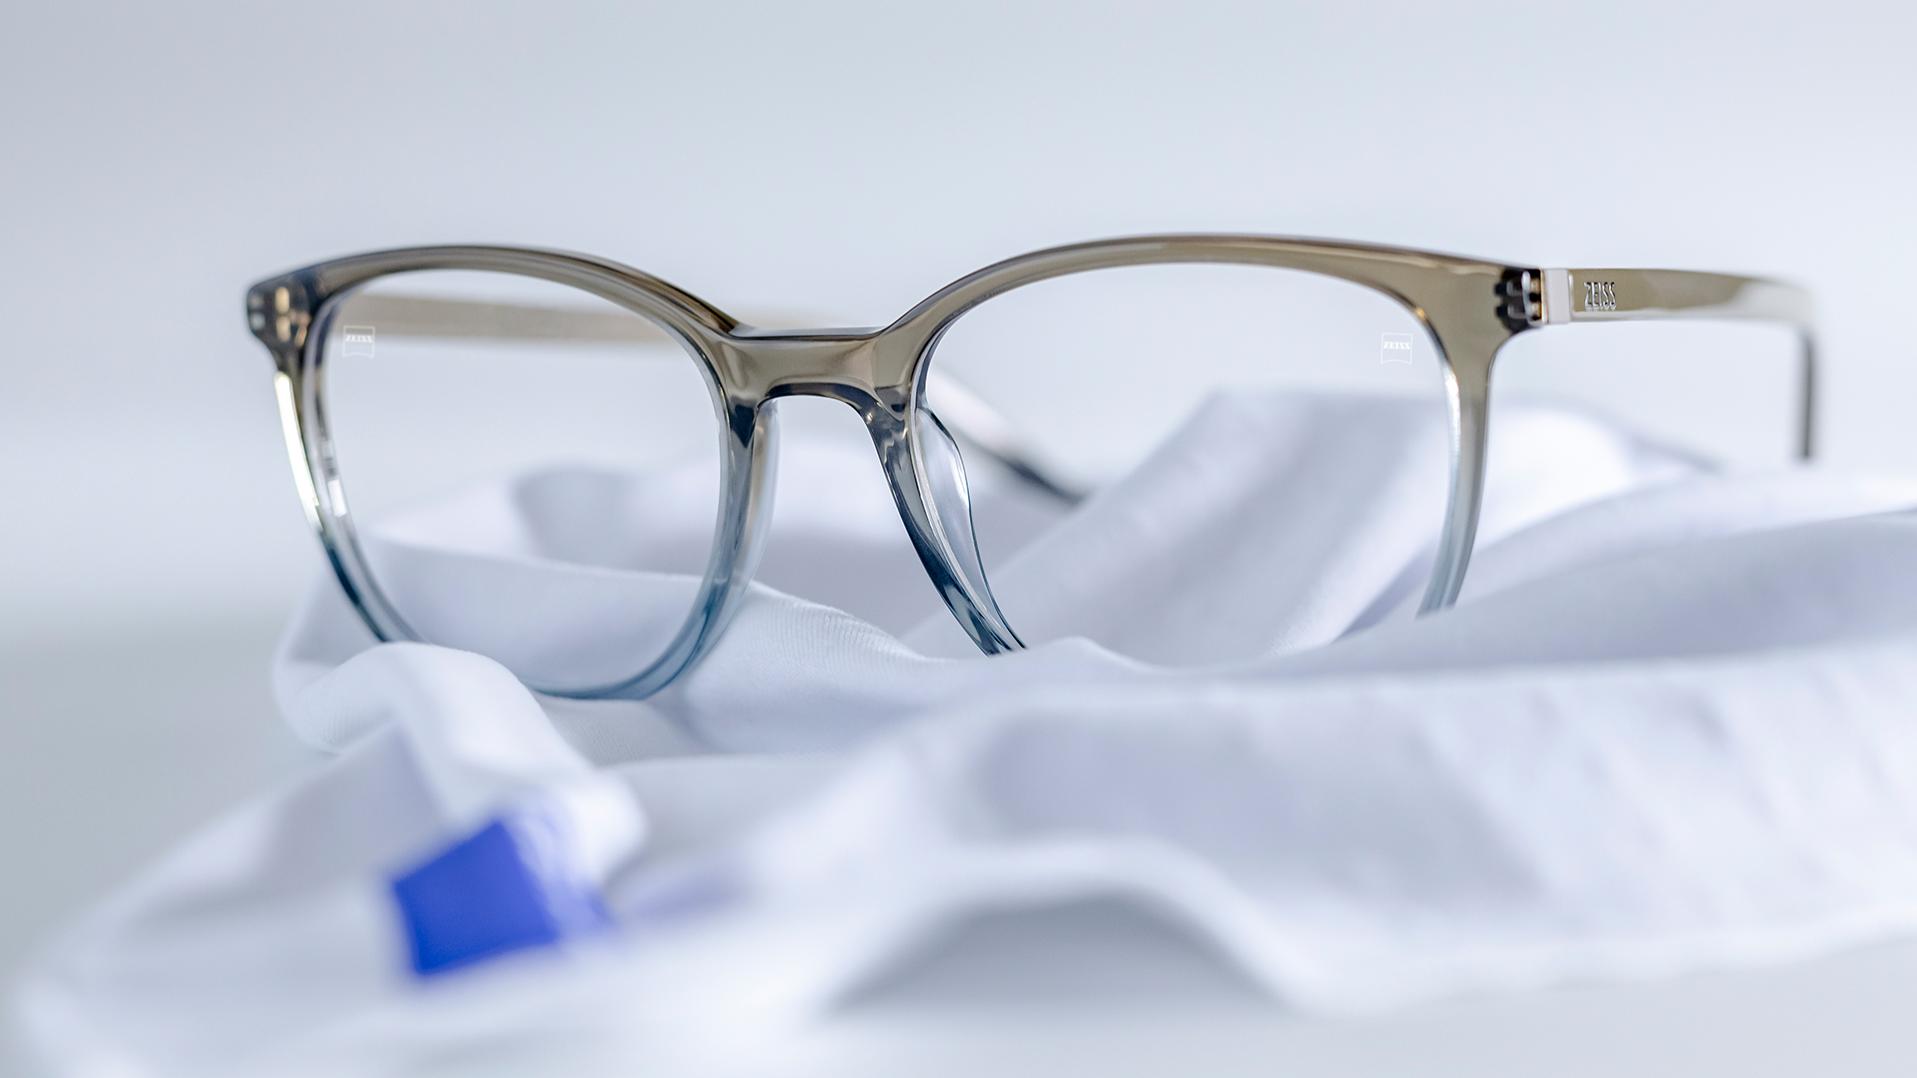 Un par de gafas con montura gris-azul y lentes ZEISS con protector DuraVision® reposan sobre un paño de microfibra blanco.